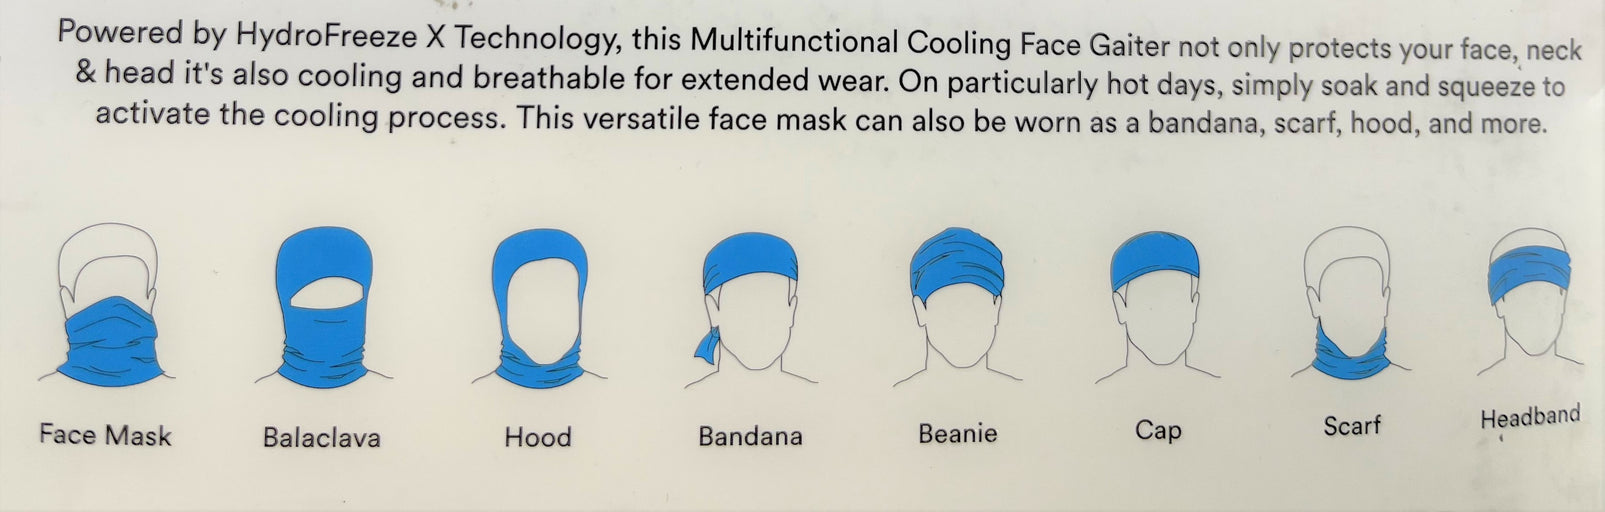 2-Pack Head Cooling Gaiters UPF 50+ Moisture Wicking Headband, Scarf, Balaclava